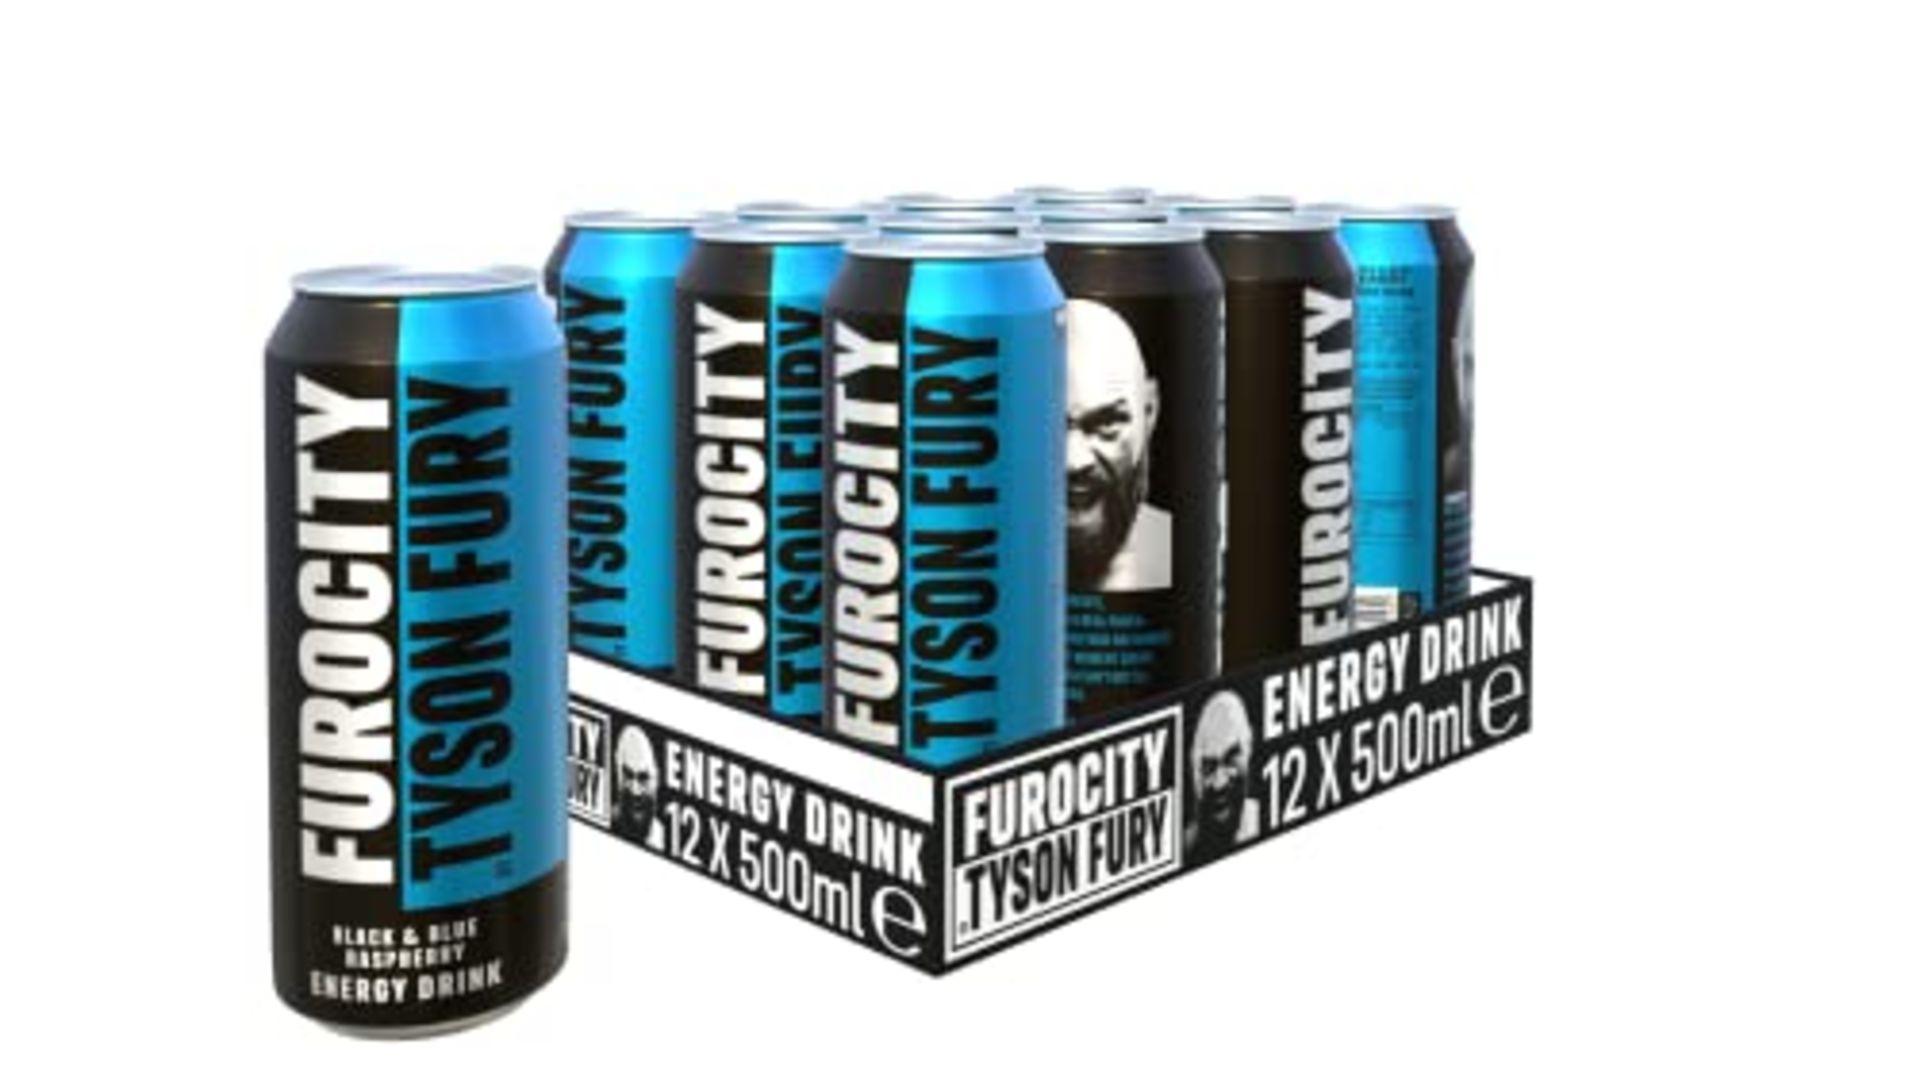 RRP £20.09 Furocity by Tyson Fury Energy Drink